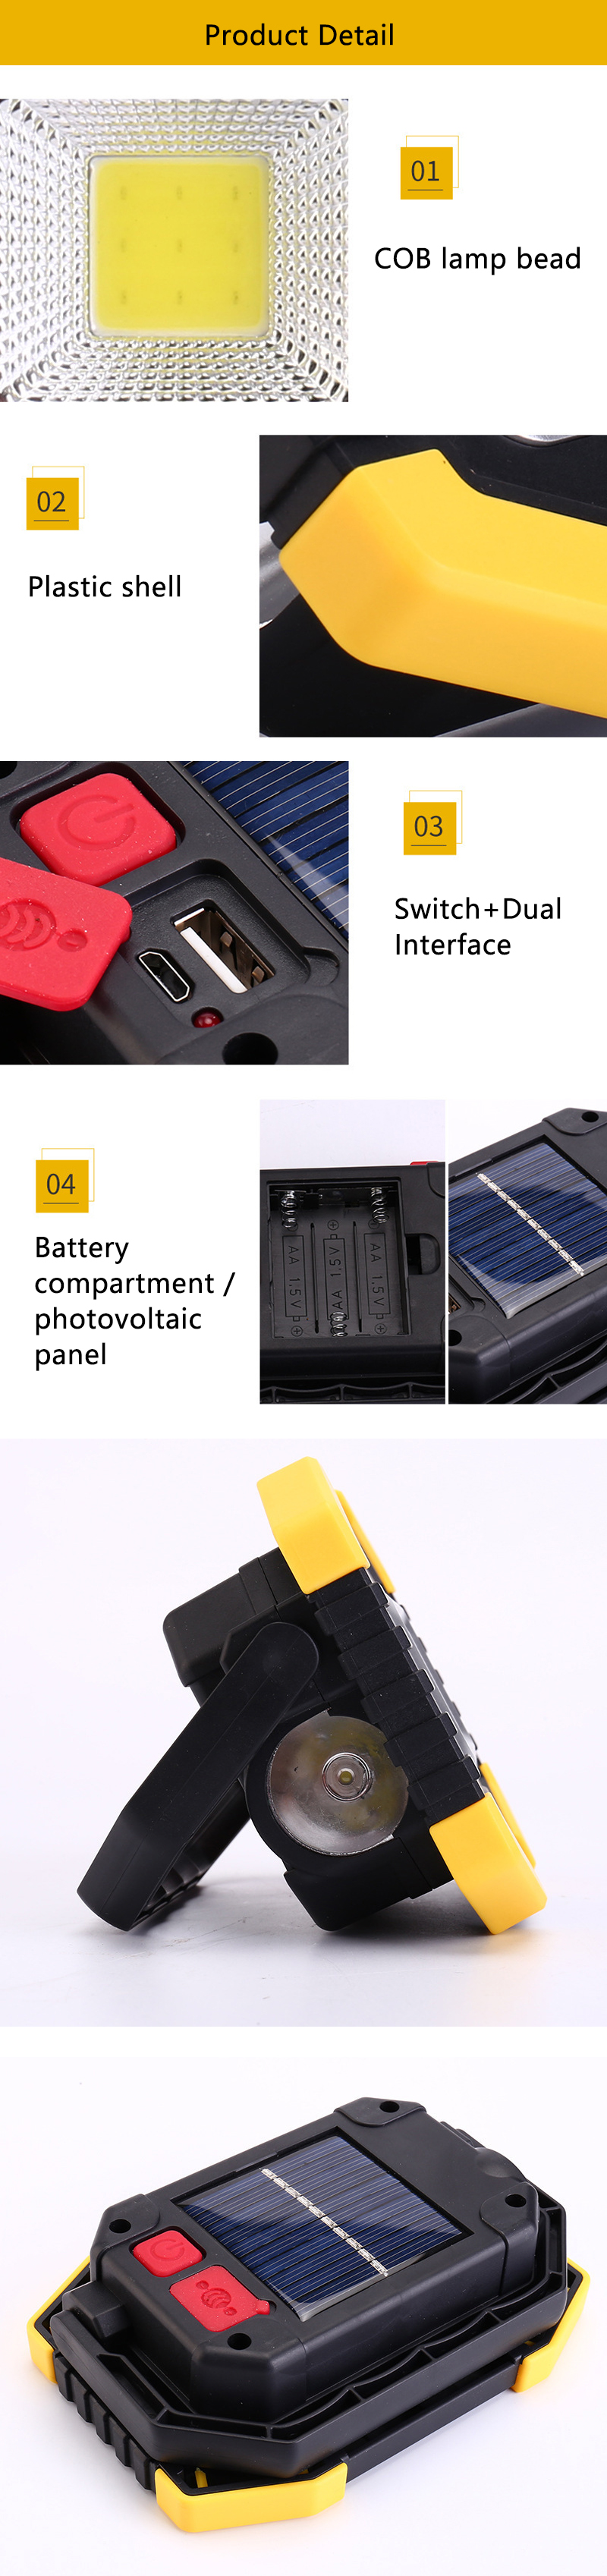 XANESreg-20W-Solar-Camping-Light-USB-COB-Work-Light-180deg-Rotation-3-Modes-Outdoor-Travel-Warning-L-1636050-2